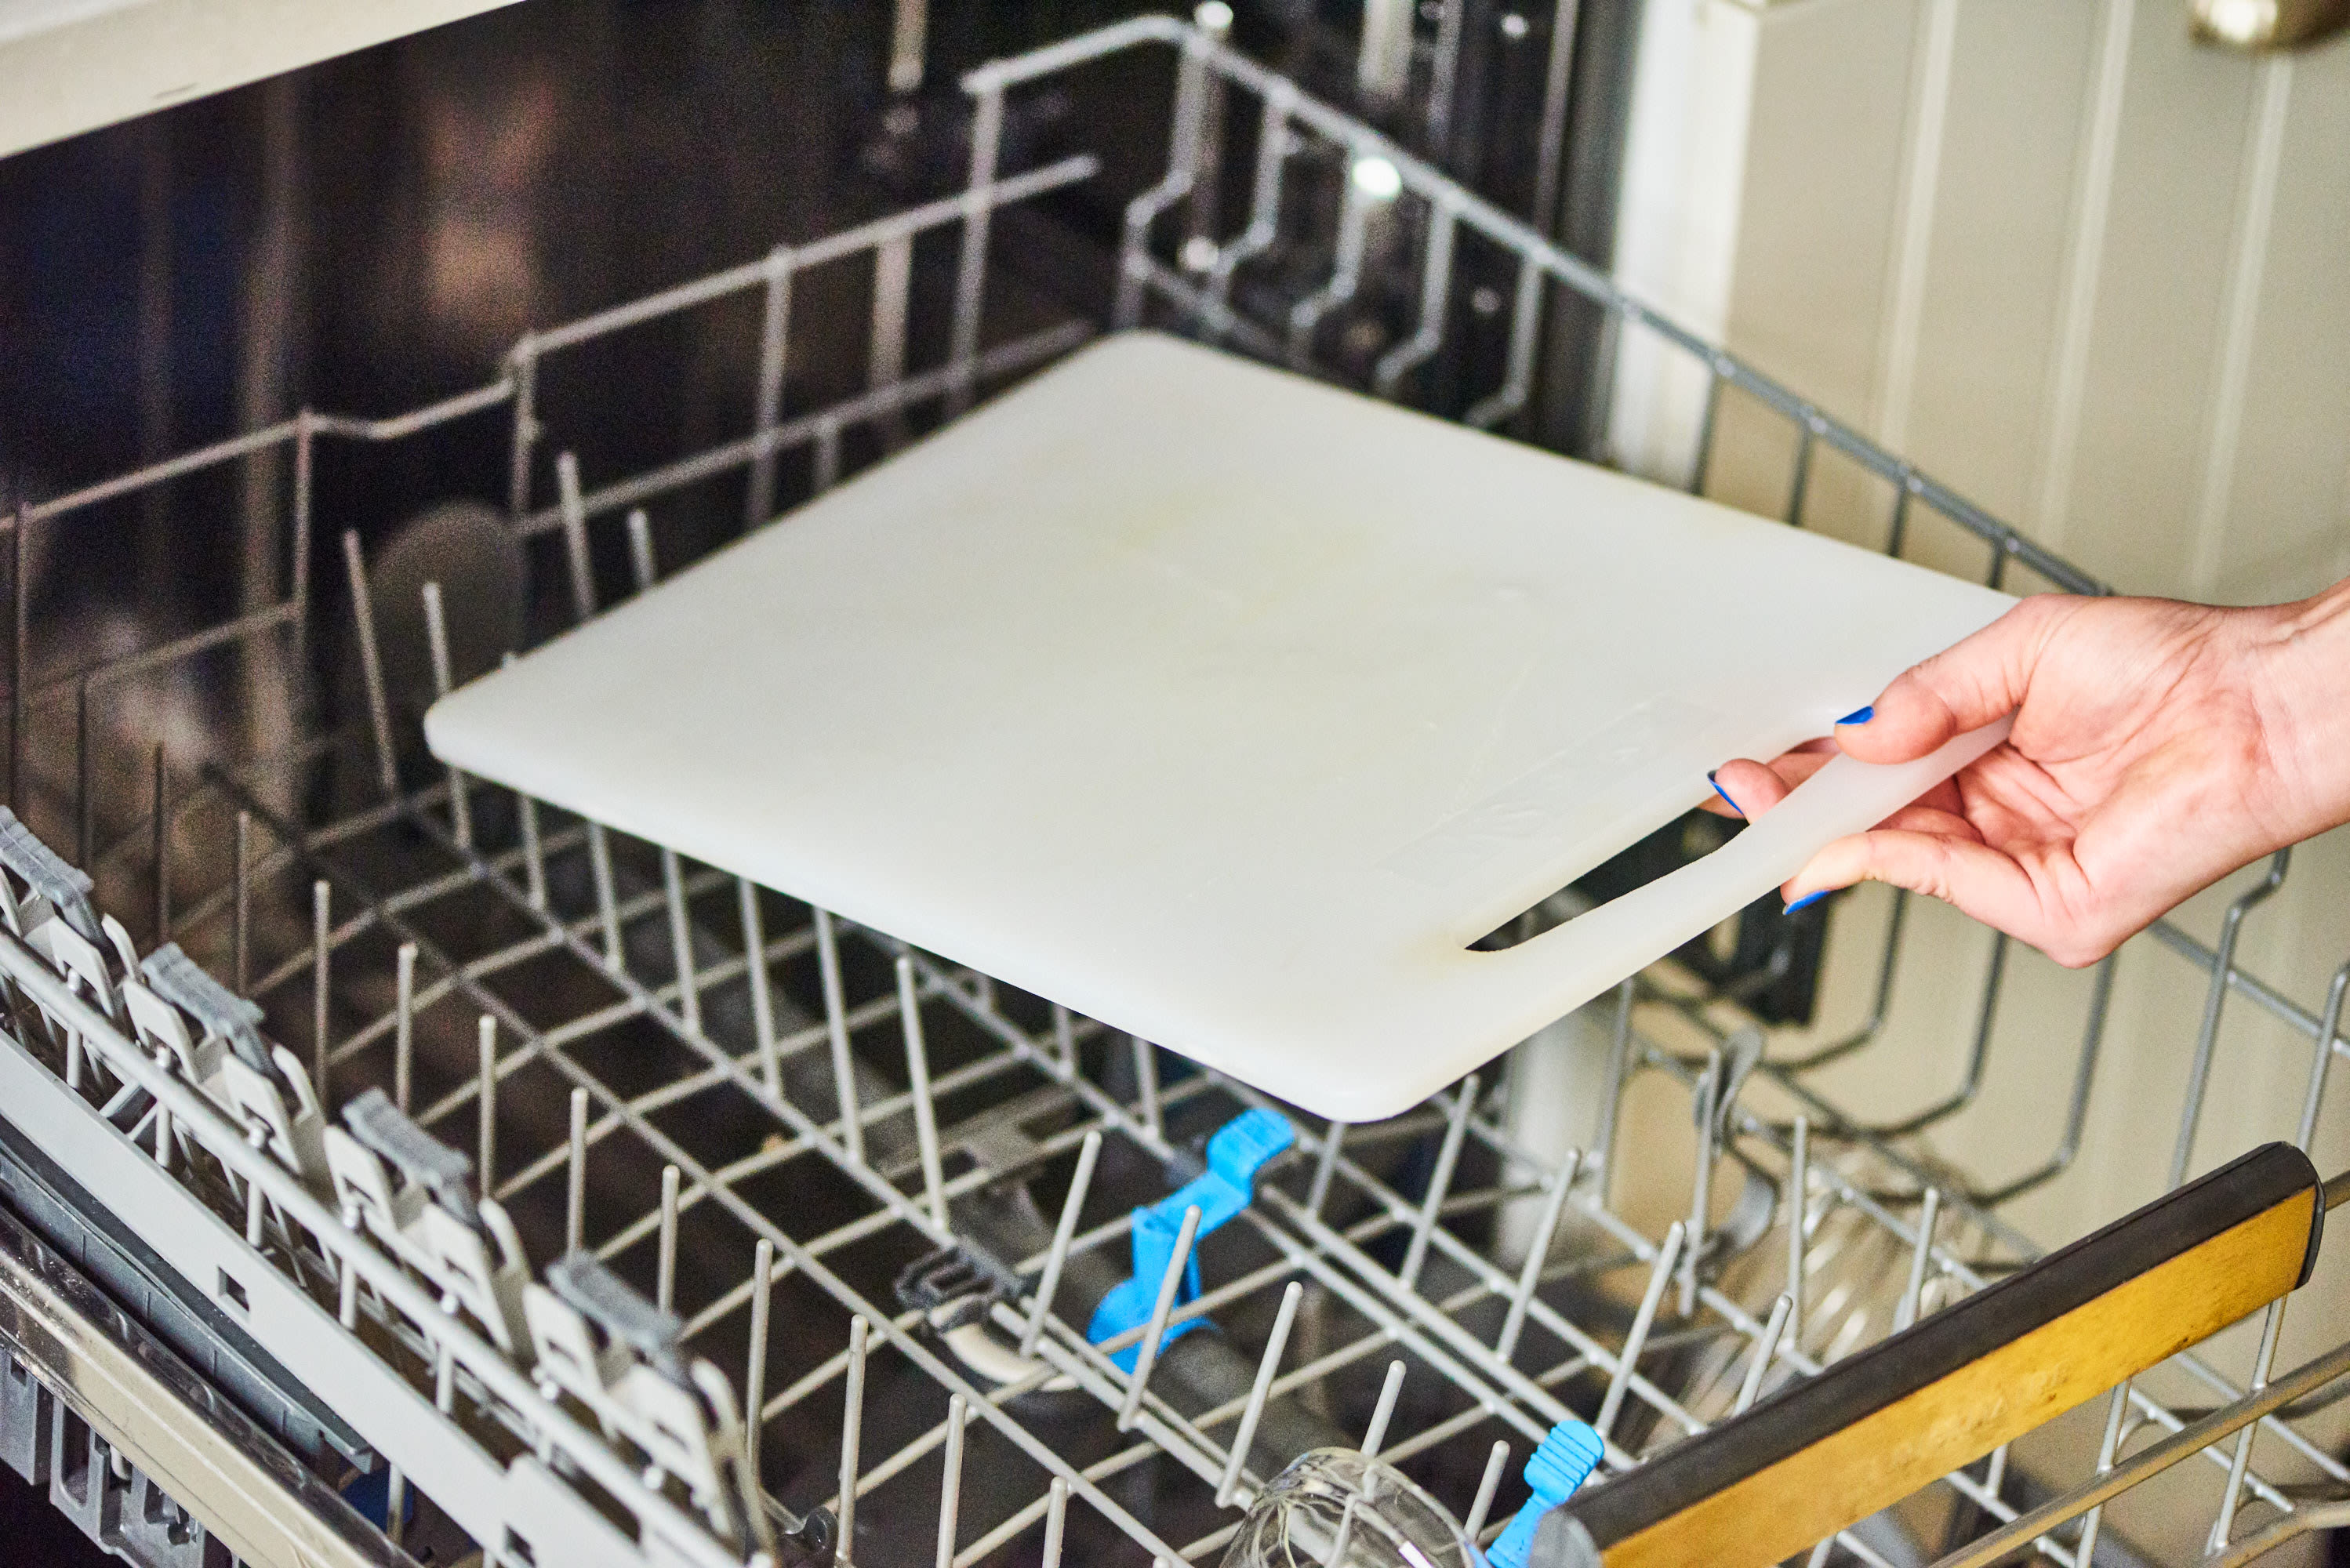 Can I Put My Cutting Board in the Dishwasher?